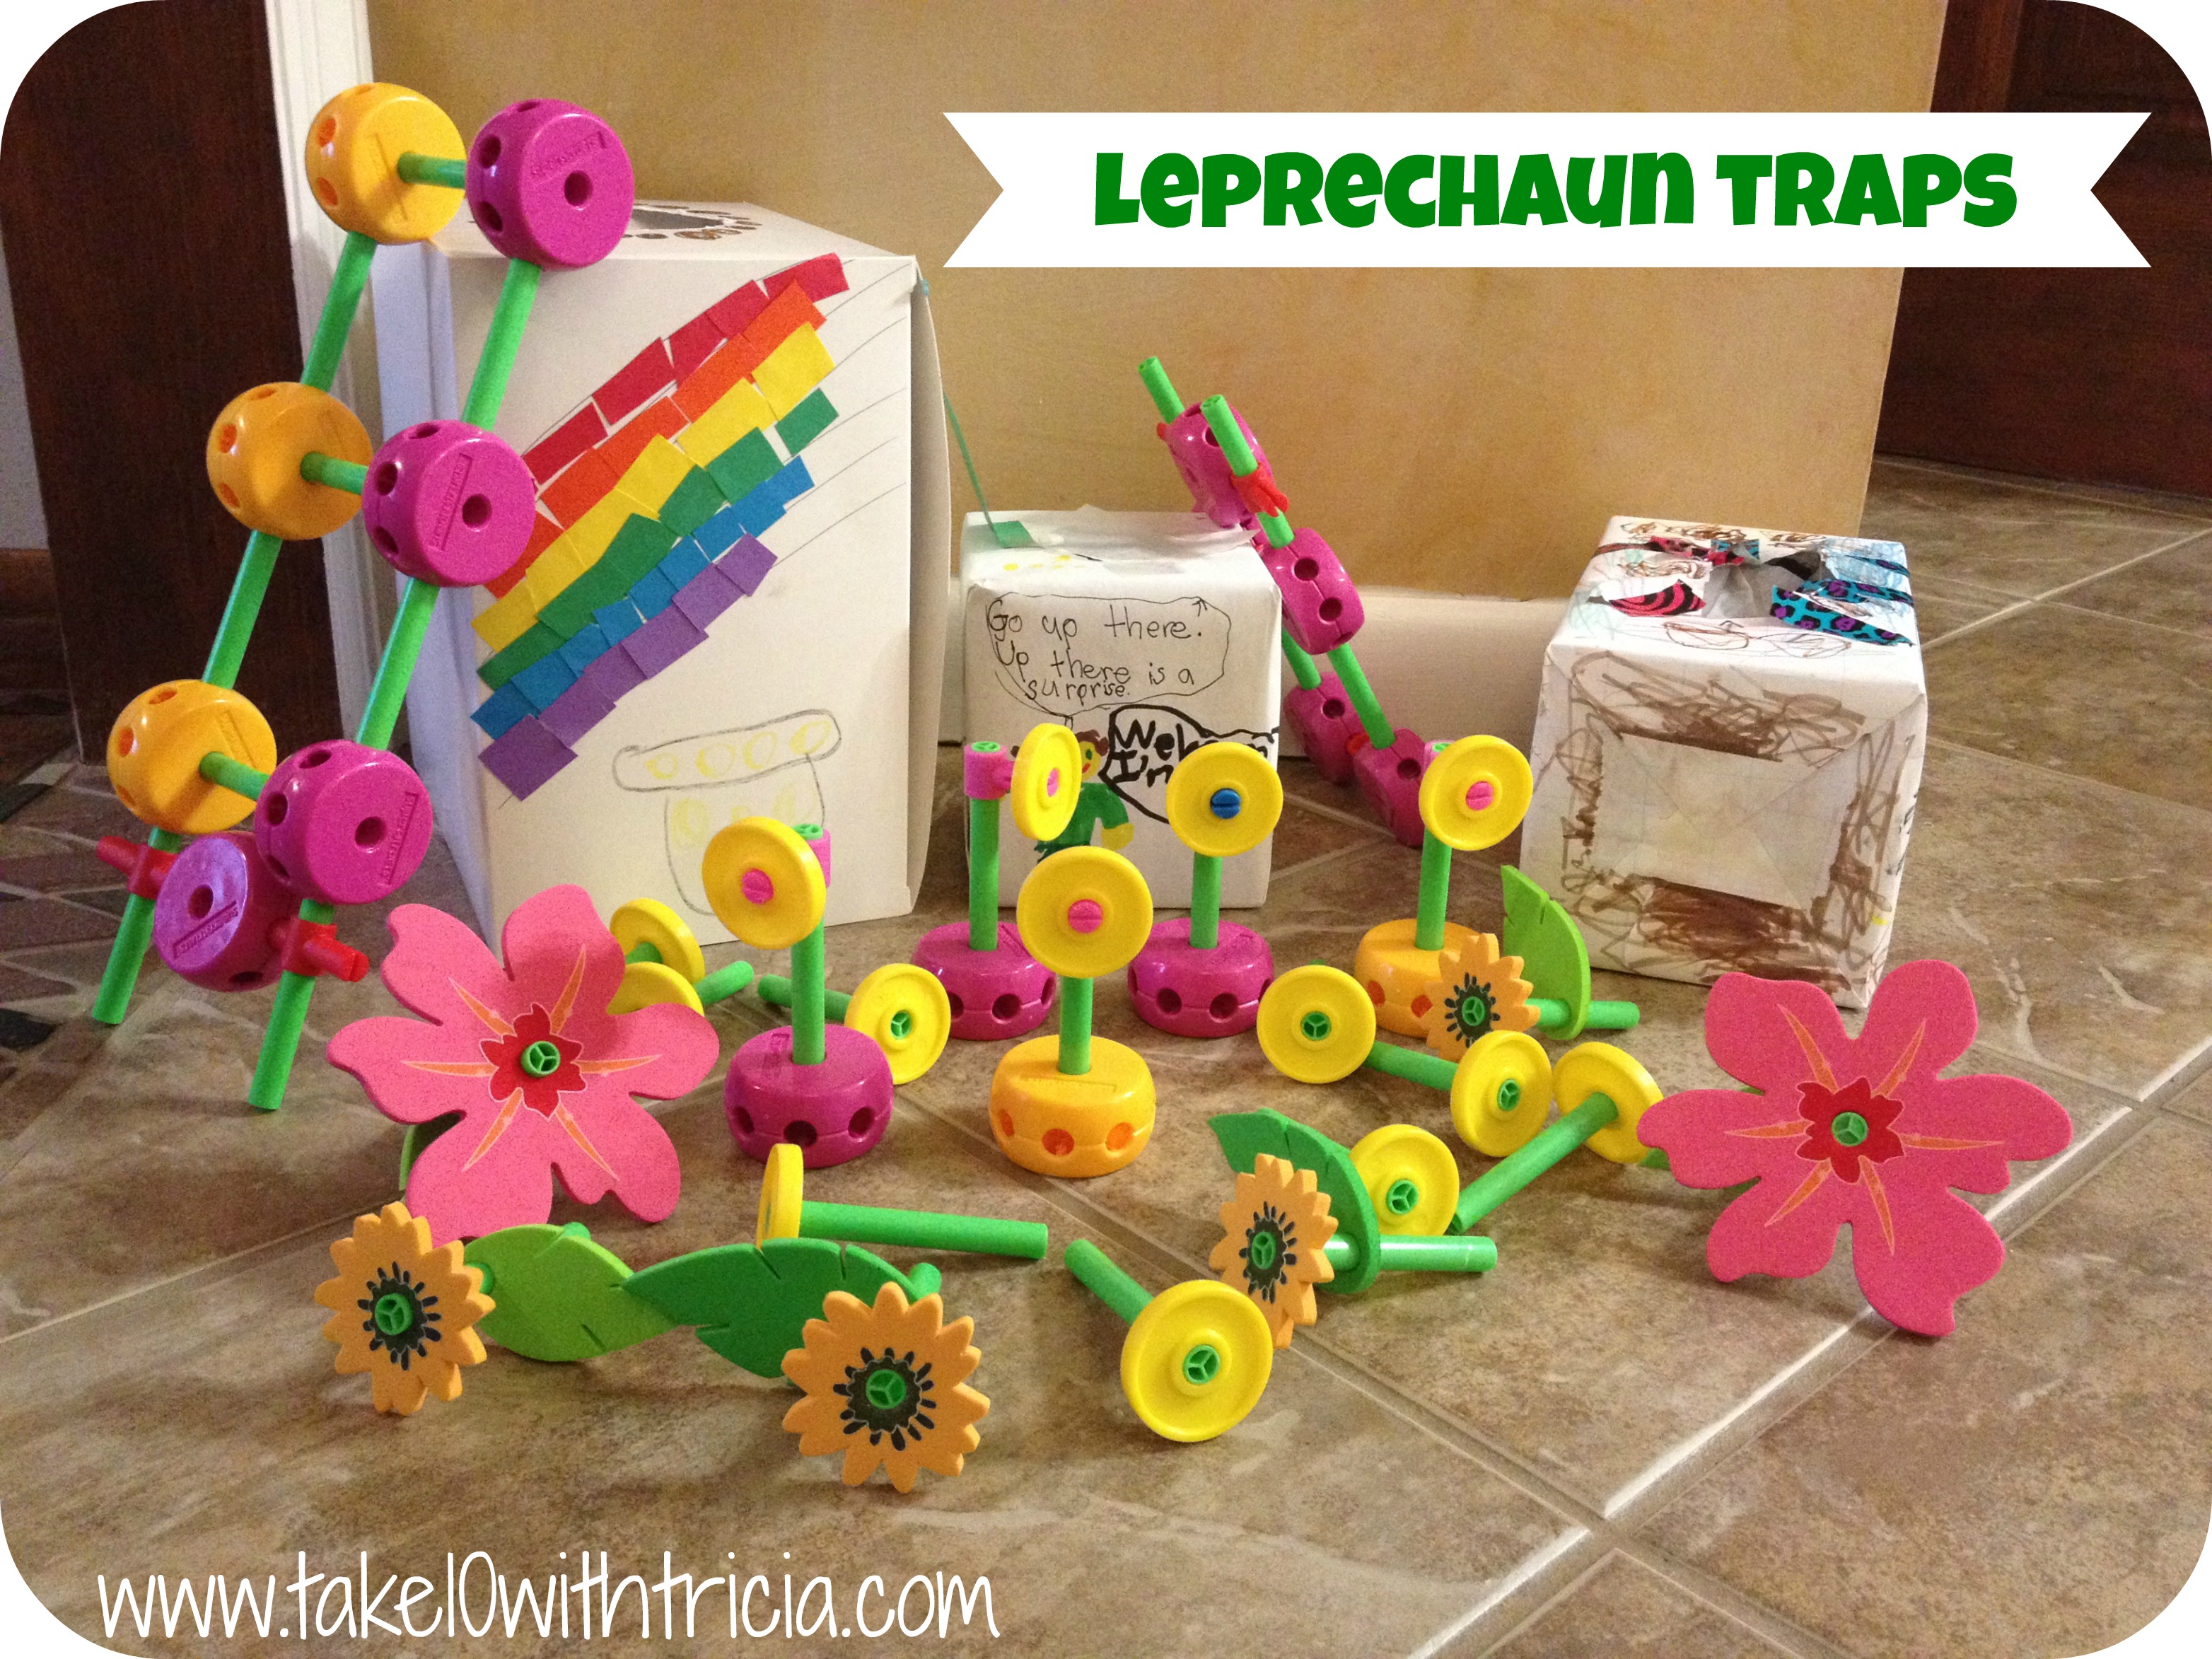 http://take10withtricia.com/taketen/wp-content/uploads/2014/03/Leprechaun-traps.jpg